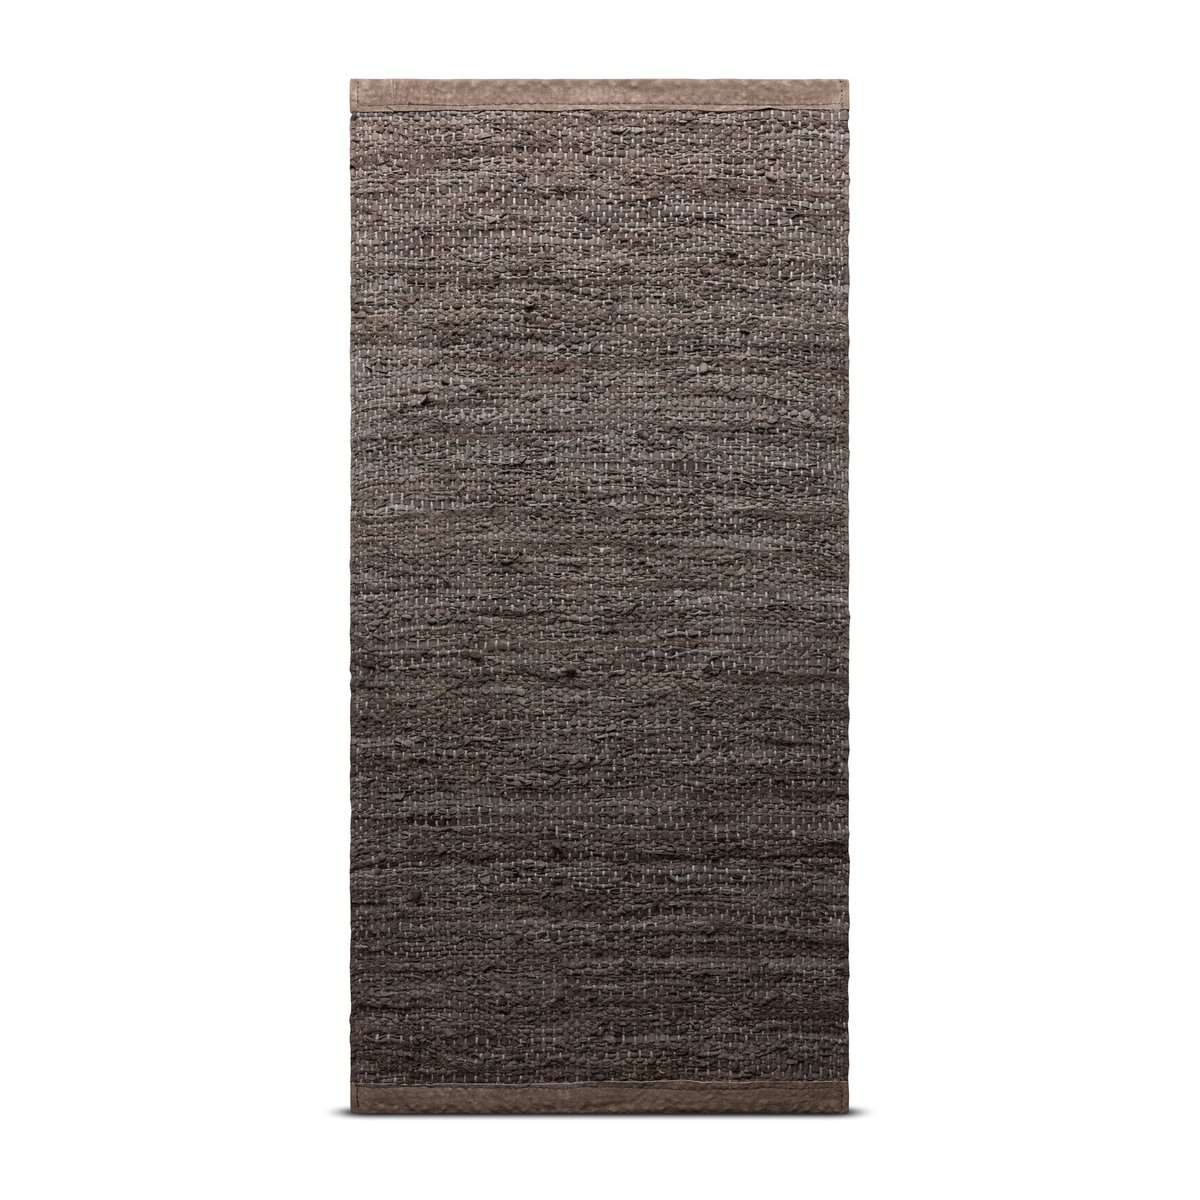 Bilde av Rug Solid Leather gulvteppe 60x90 cm Wood (brun)